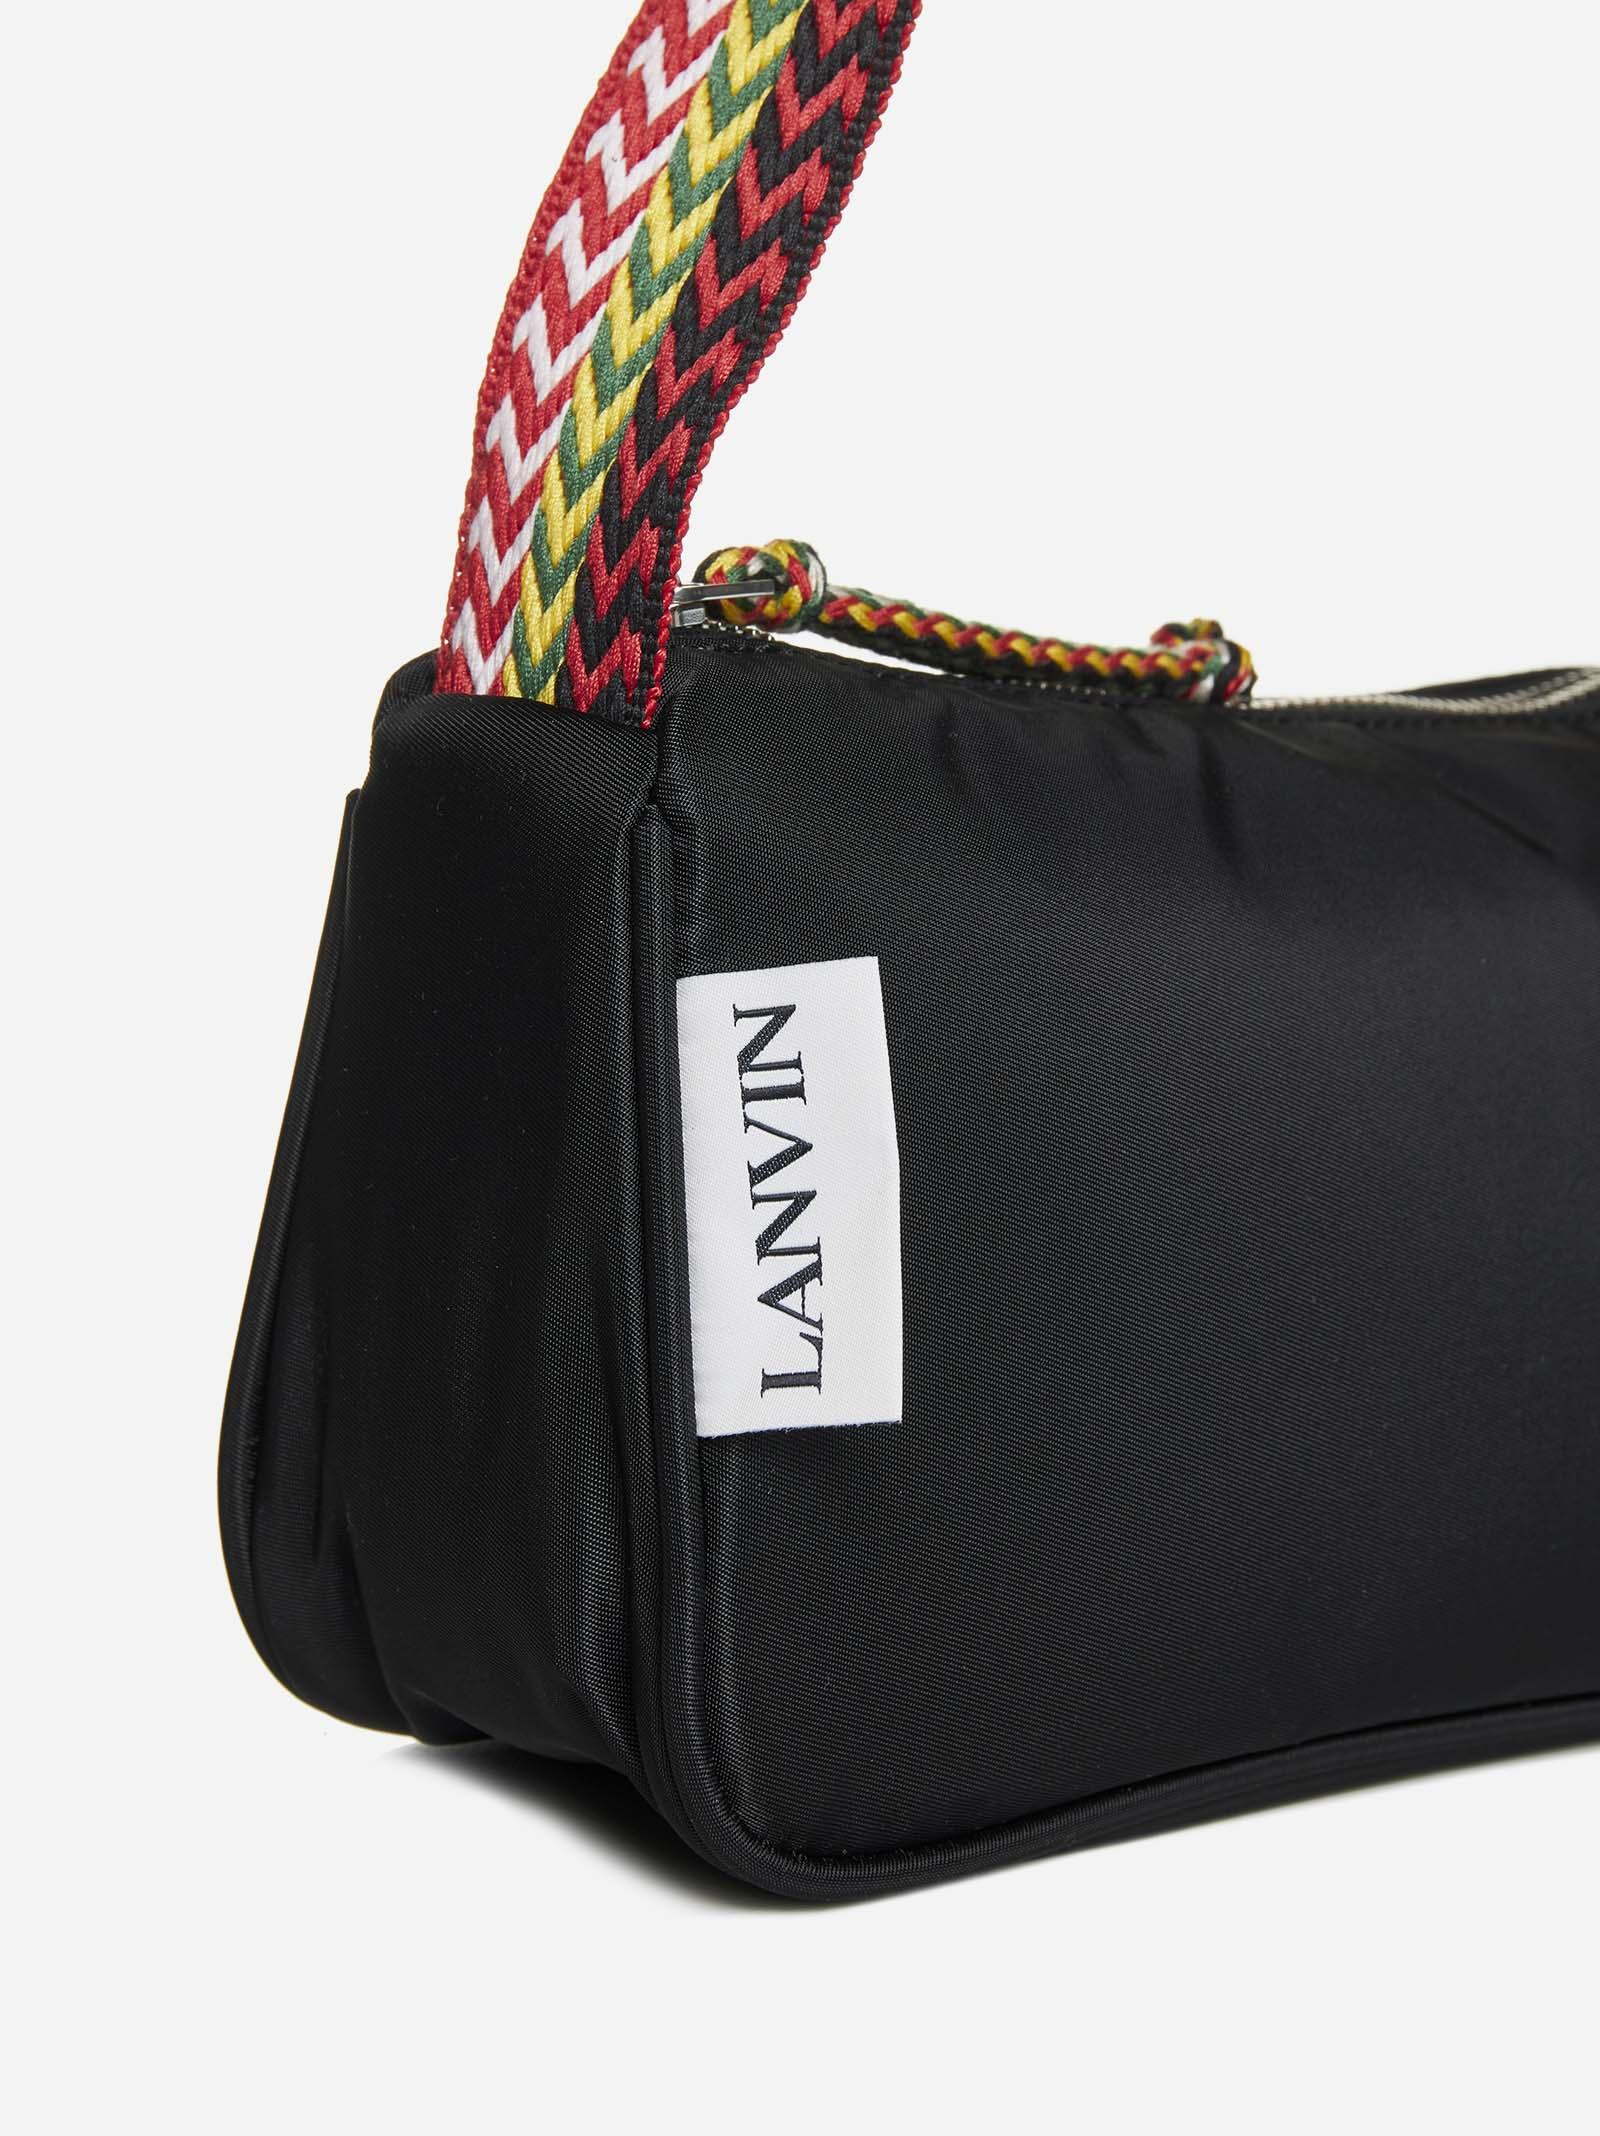 Lanvin Curb Nylon Hand Bag in Black | Lyst